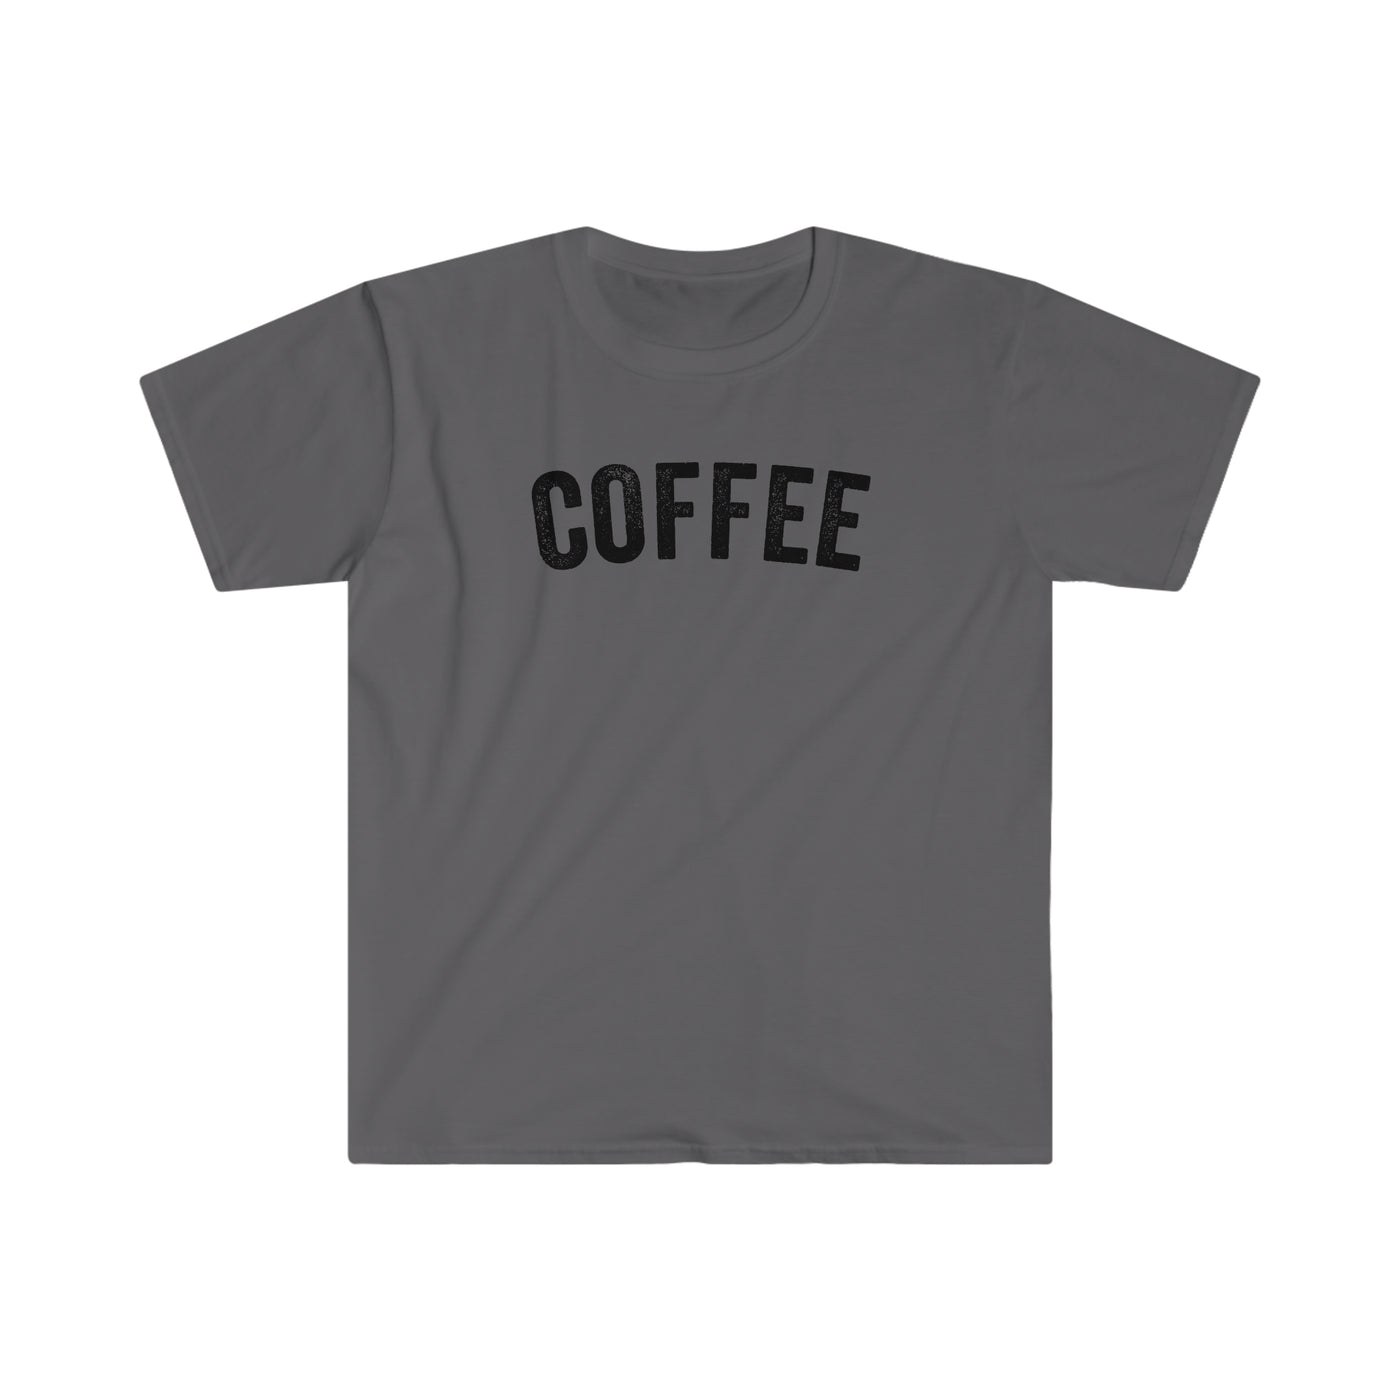 Coffee Unisex T-Shirt